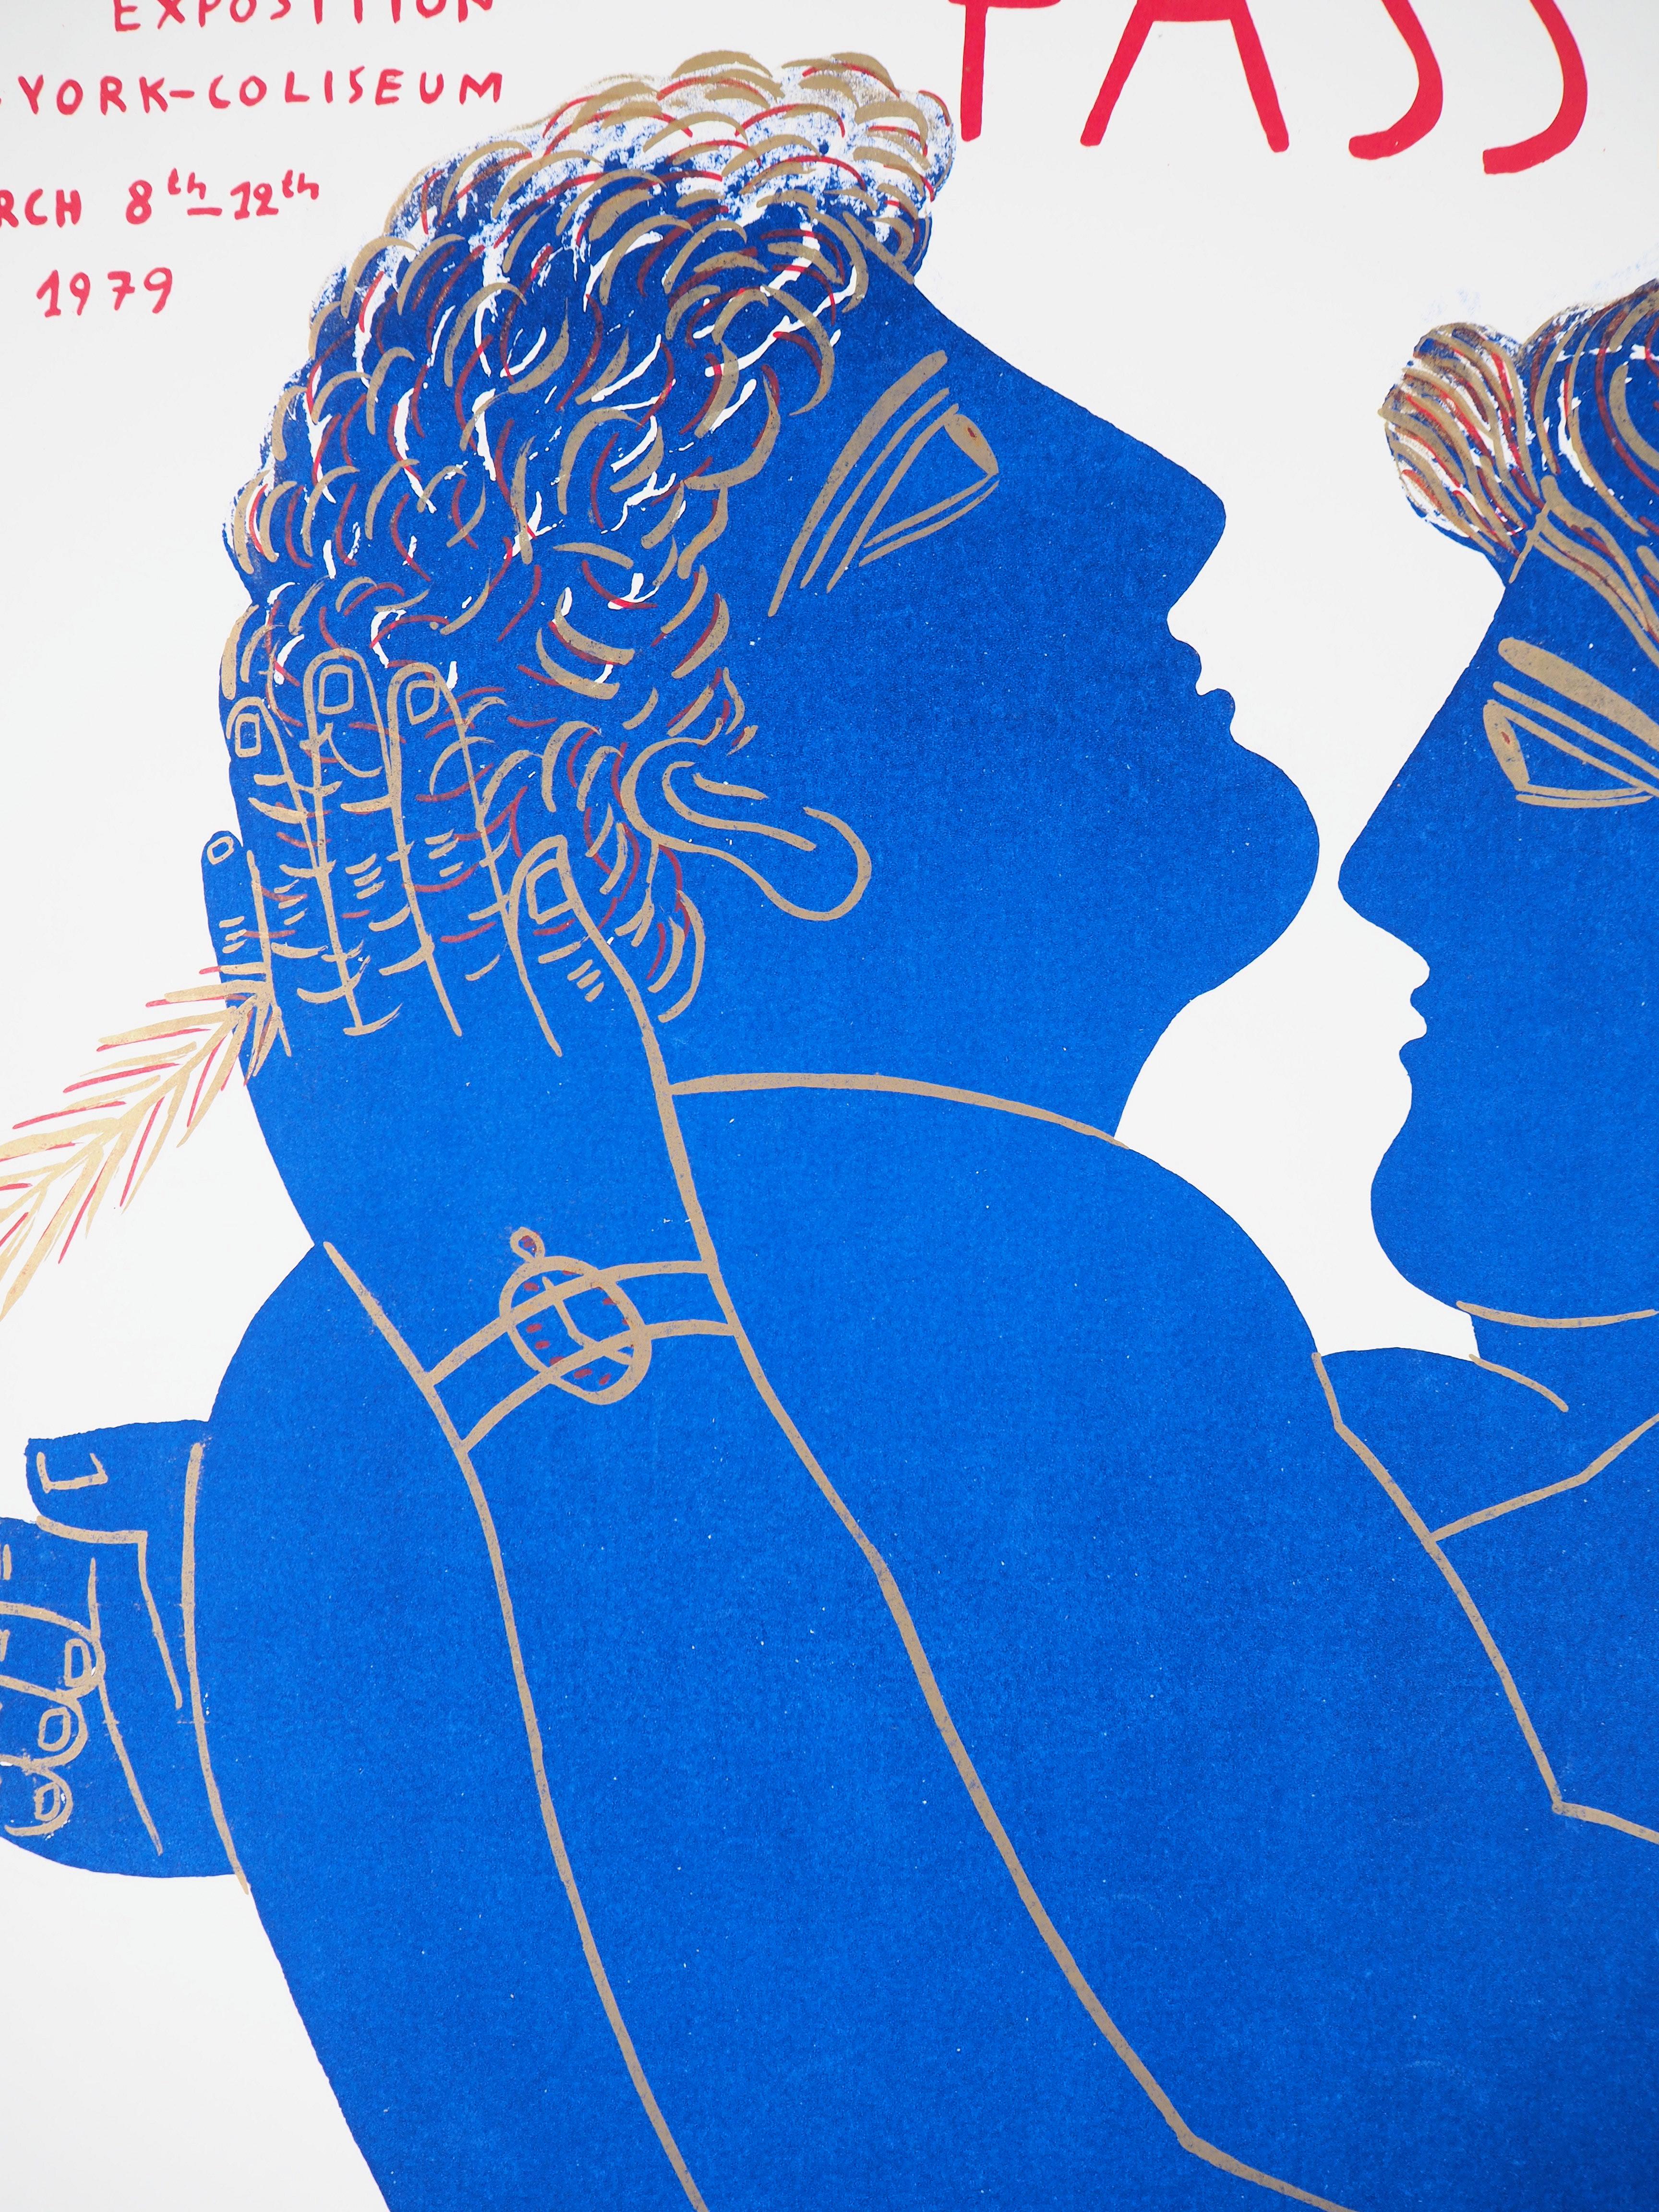 Greece : Hugging Couple (New York Coliseum) - Original lithograph, 1979 - Print by Alekos Fassianos